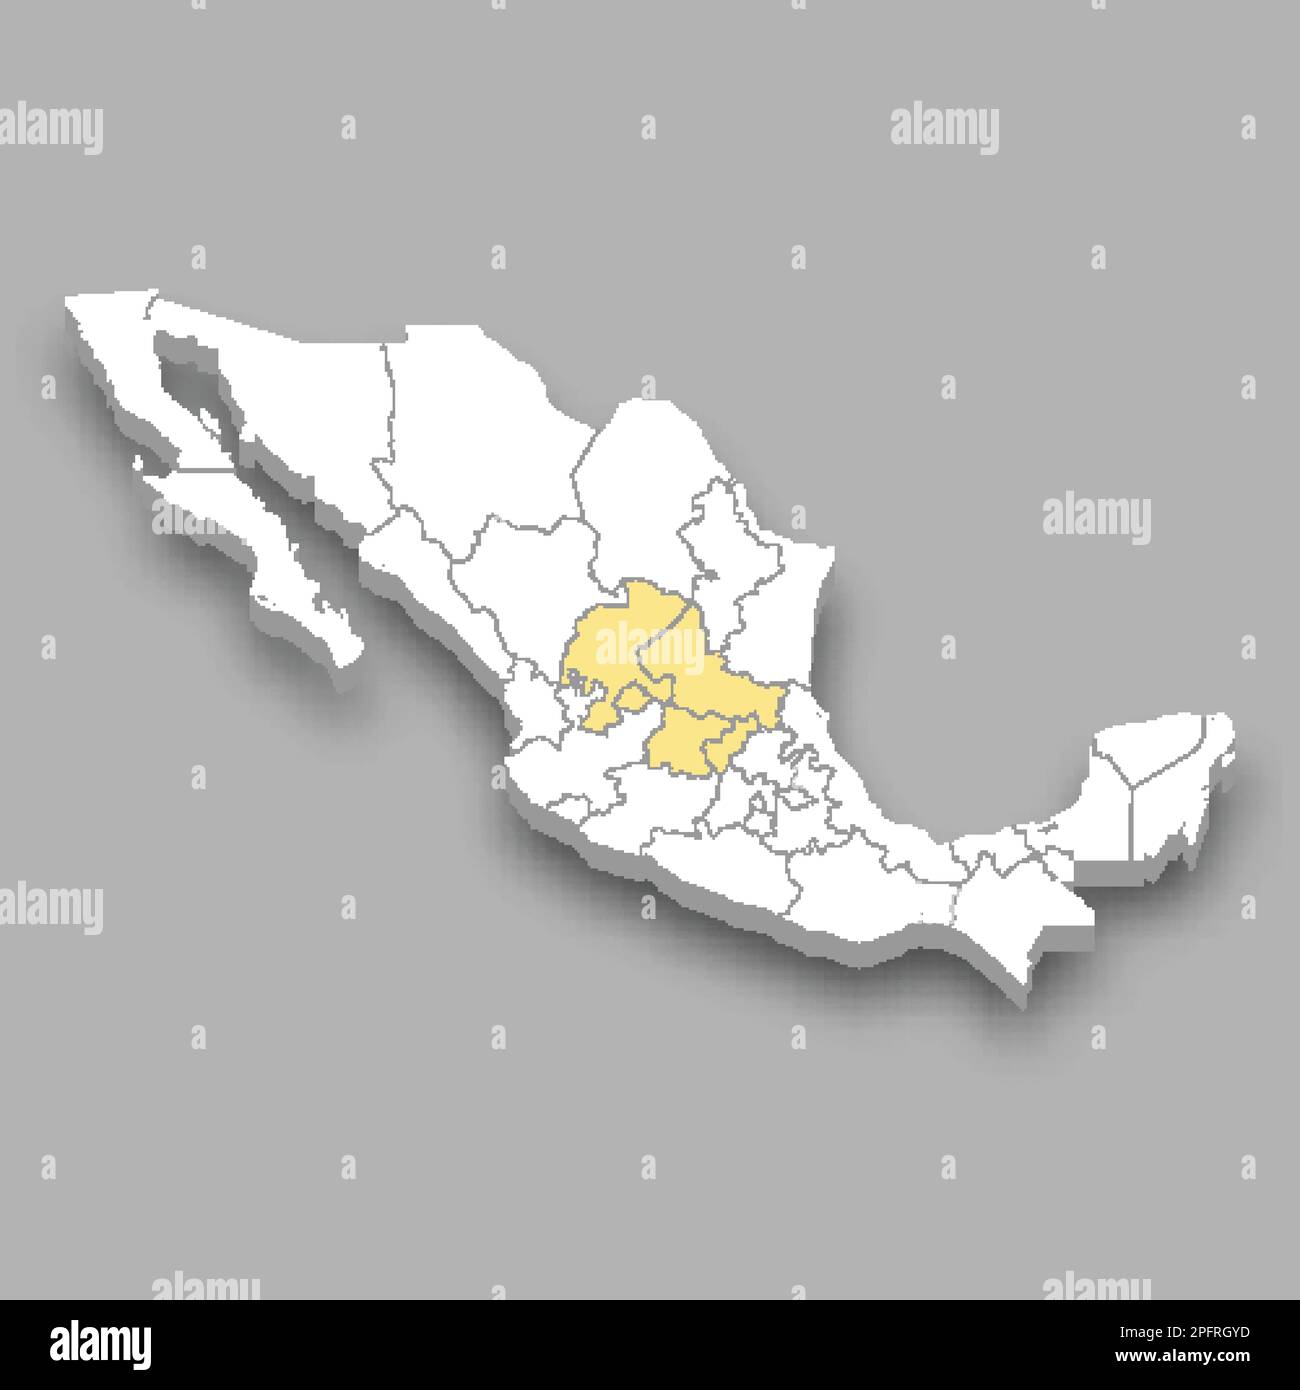 The Bajio region location within Mexico 3d isometric map Stock Vector